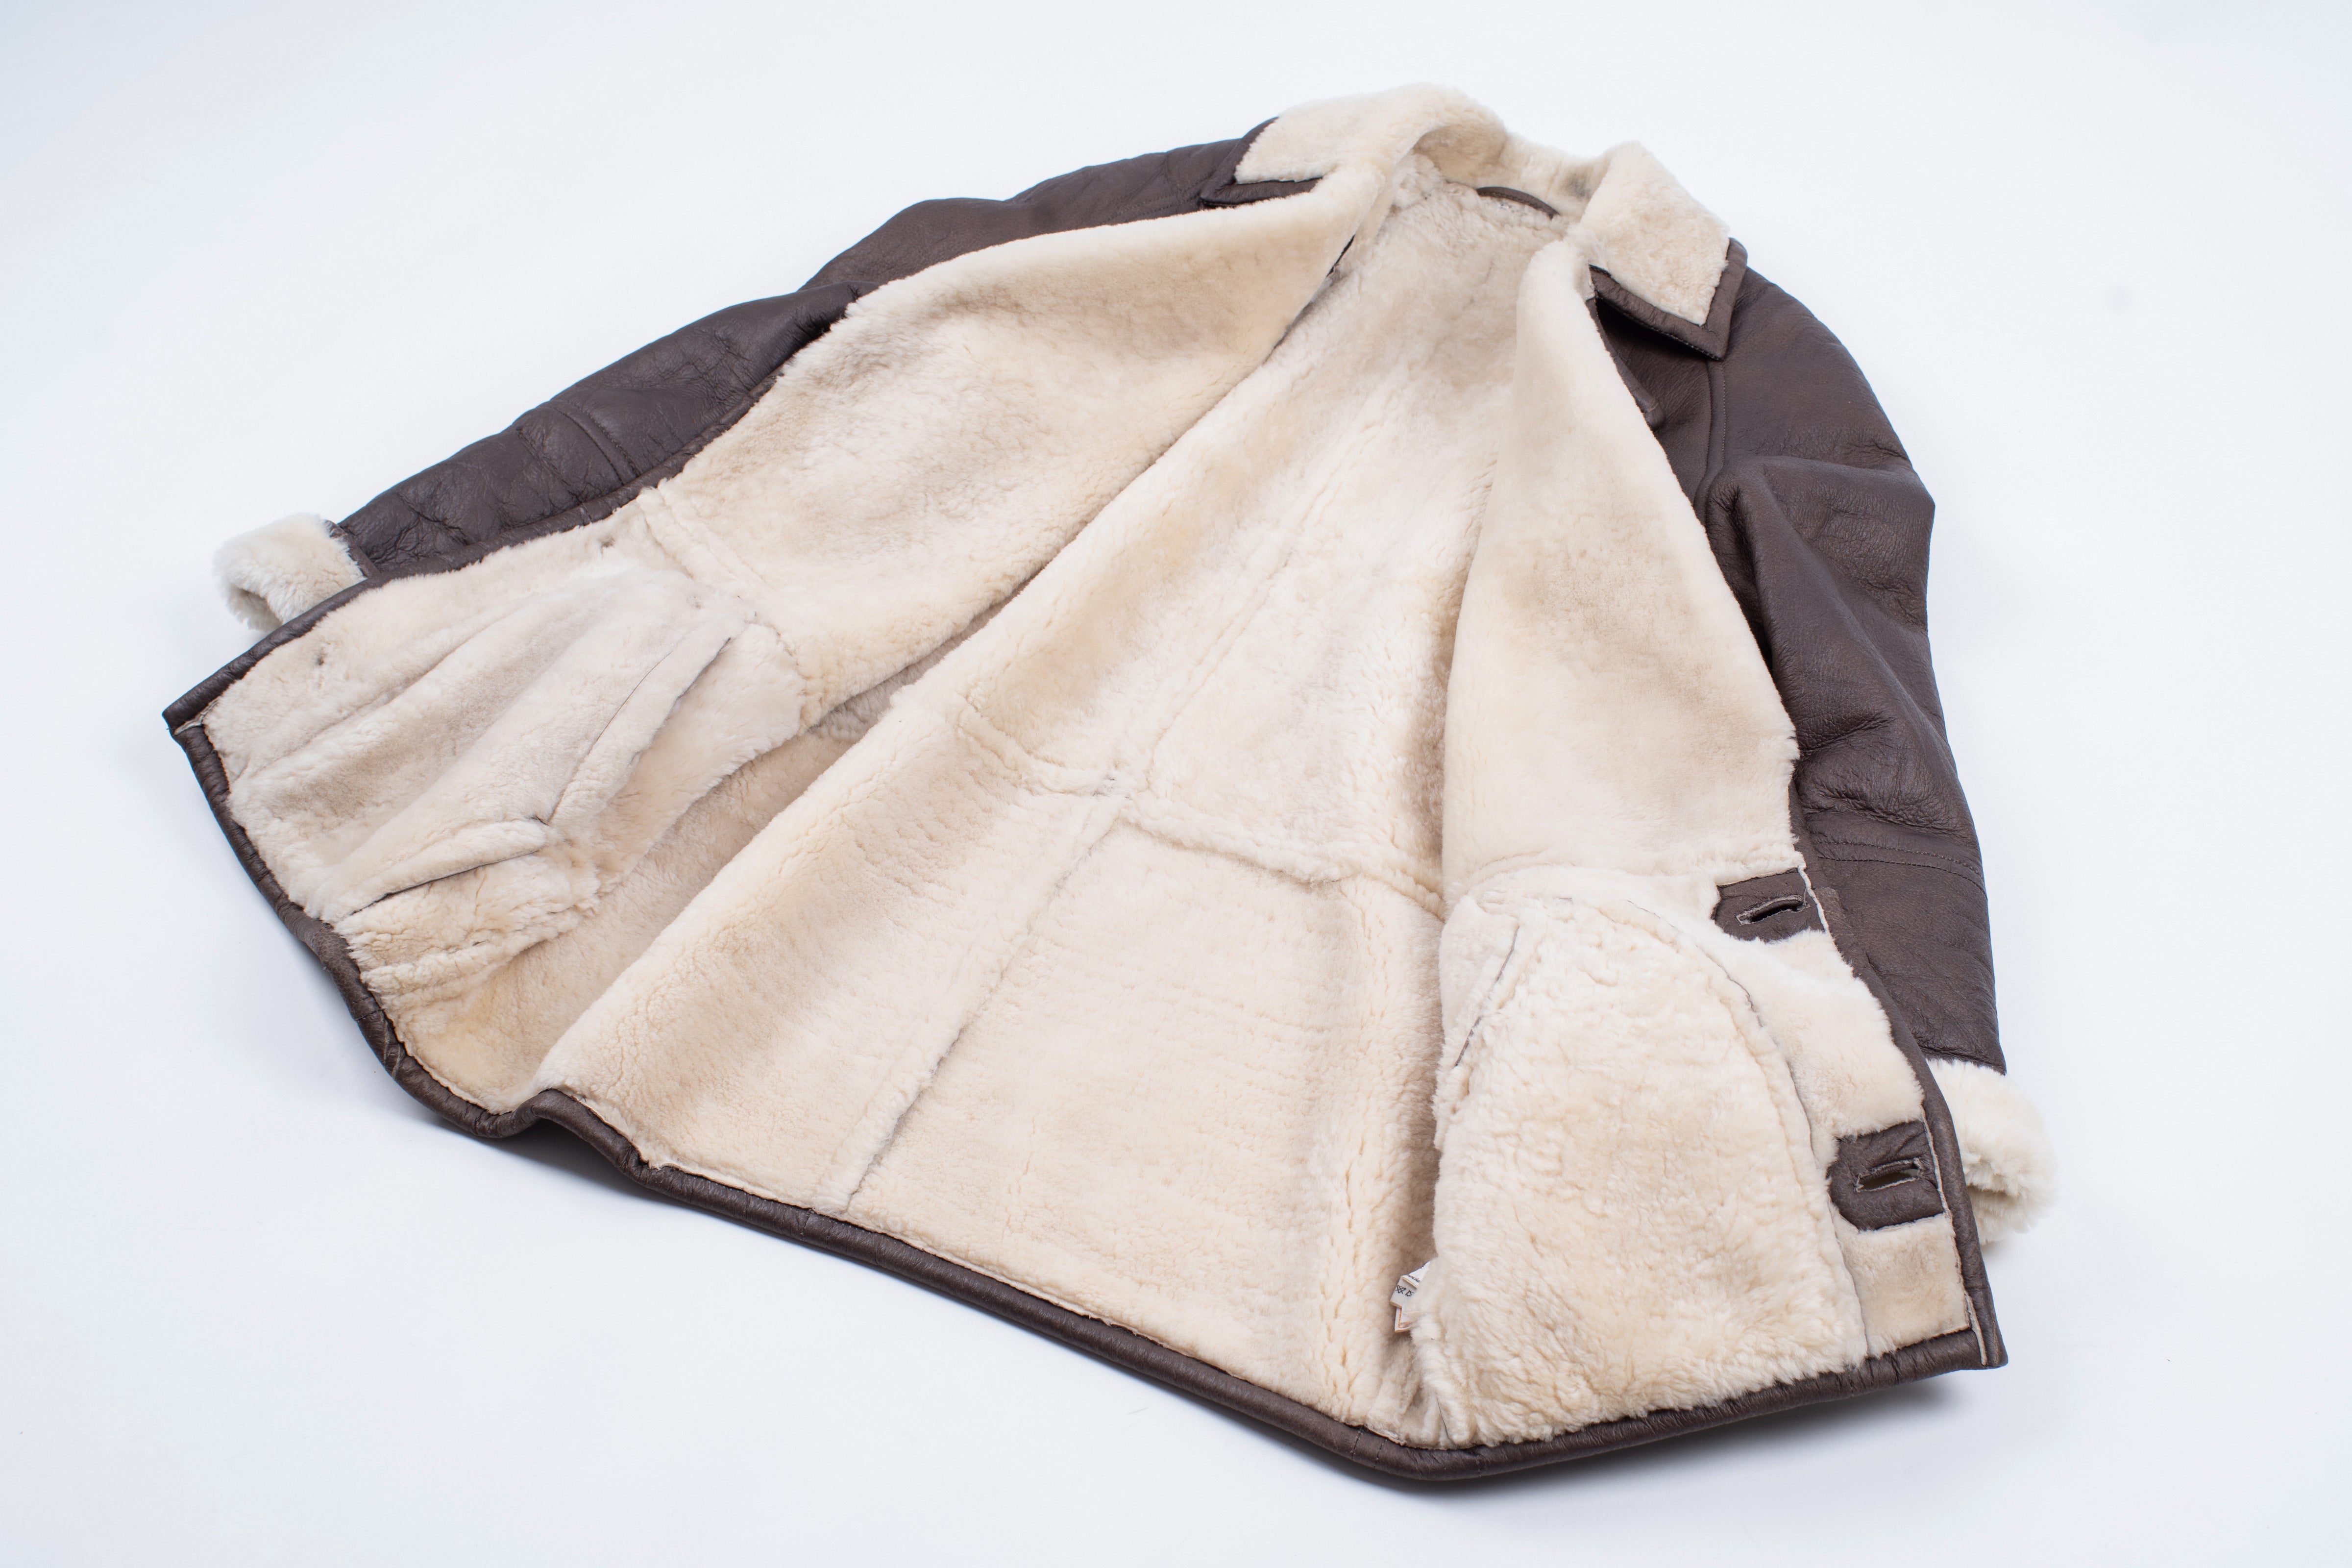 Trussardi Men's Brown Supple Leather Shearling Coat, XL